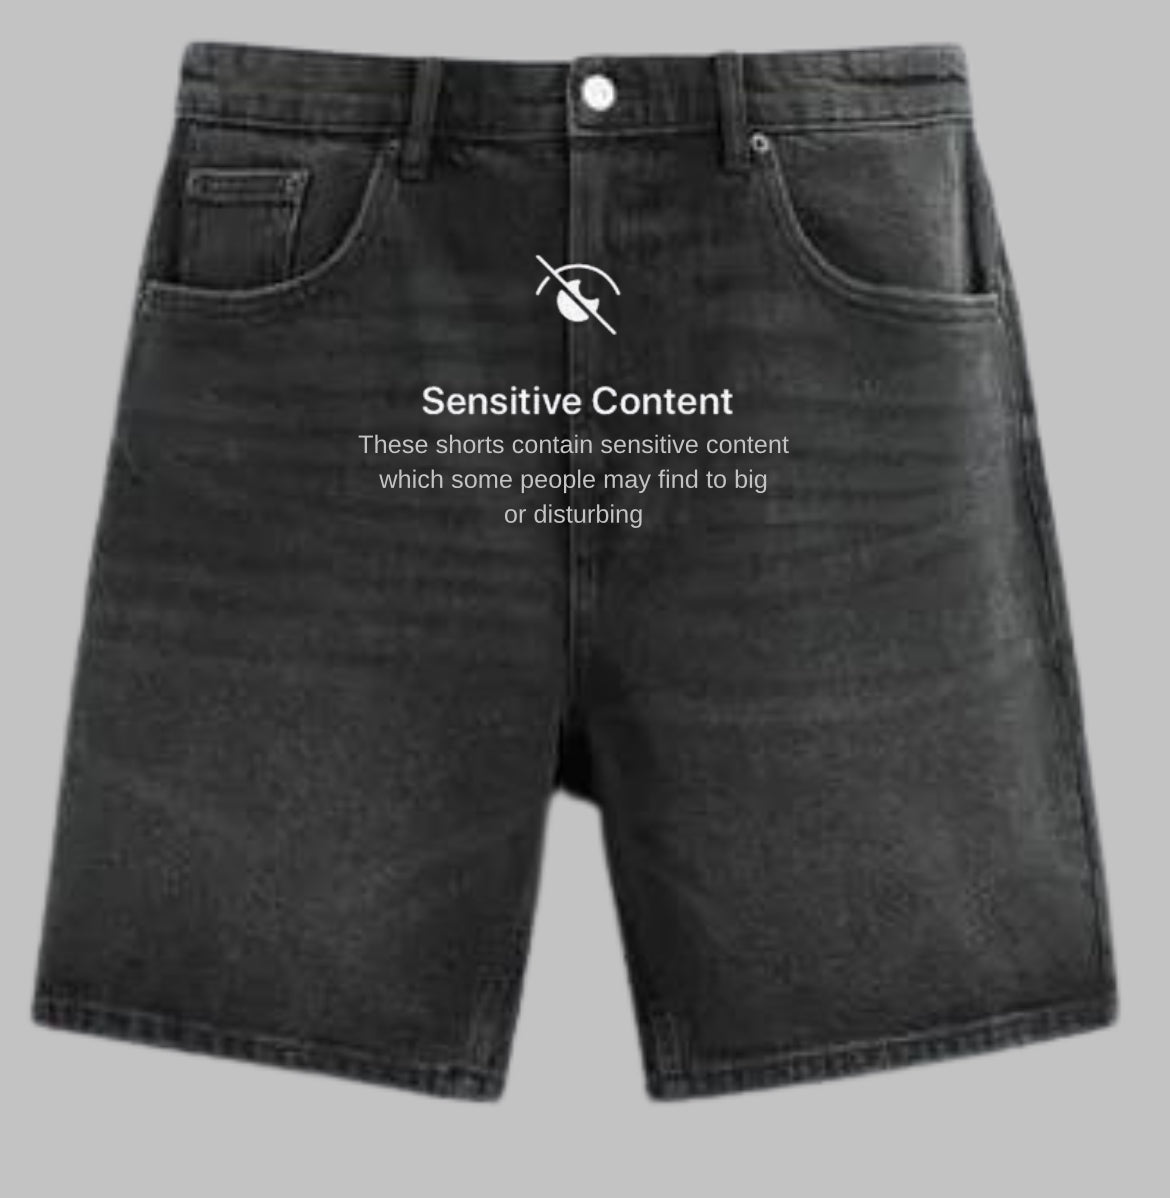 sensitive content jean shorts